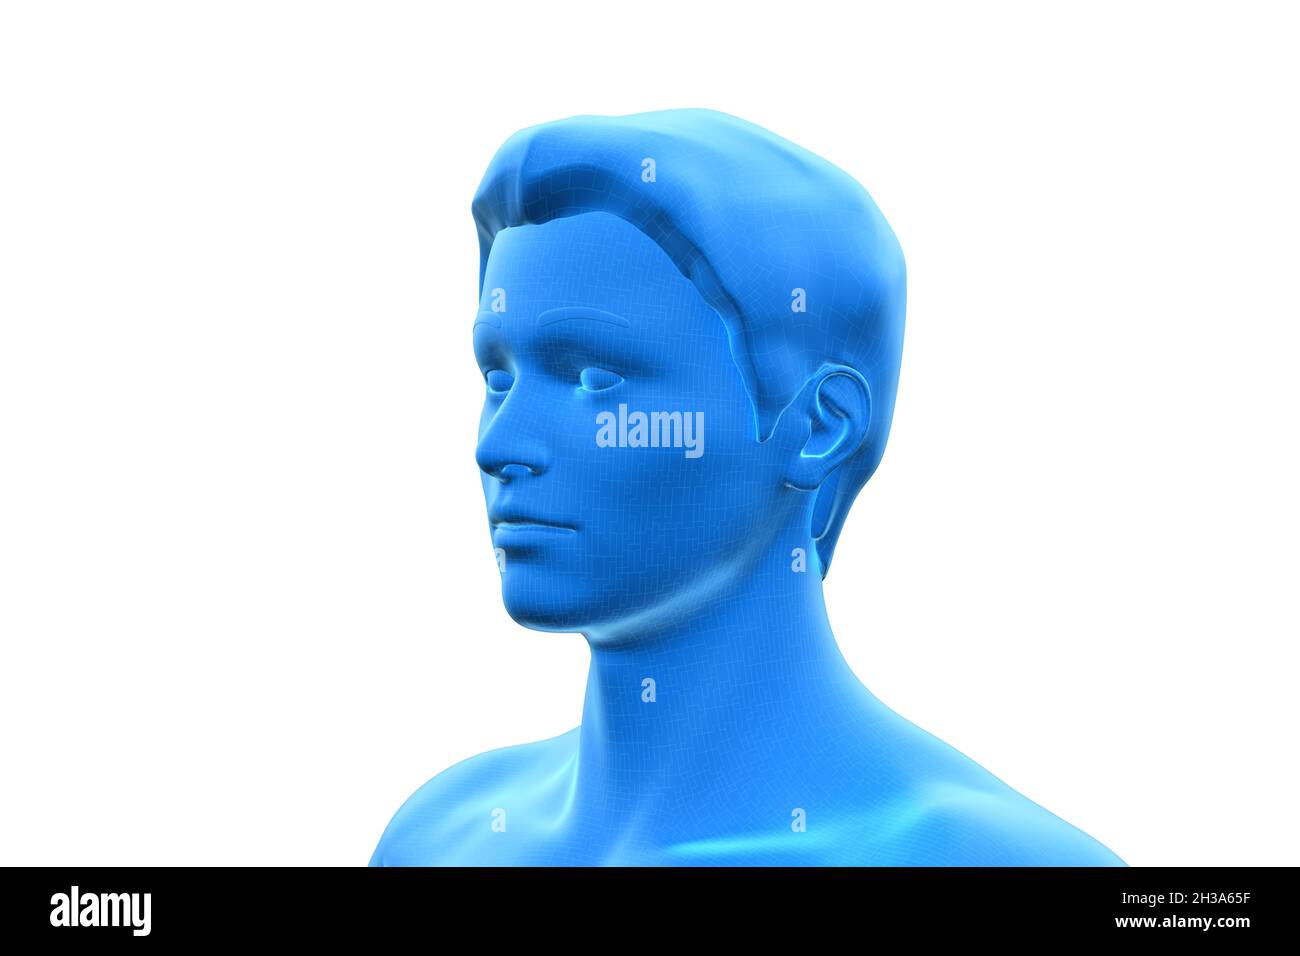 Man, Head of Human Male, 3D Stockfoto